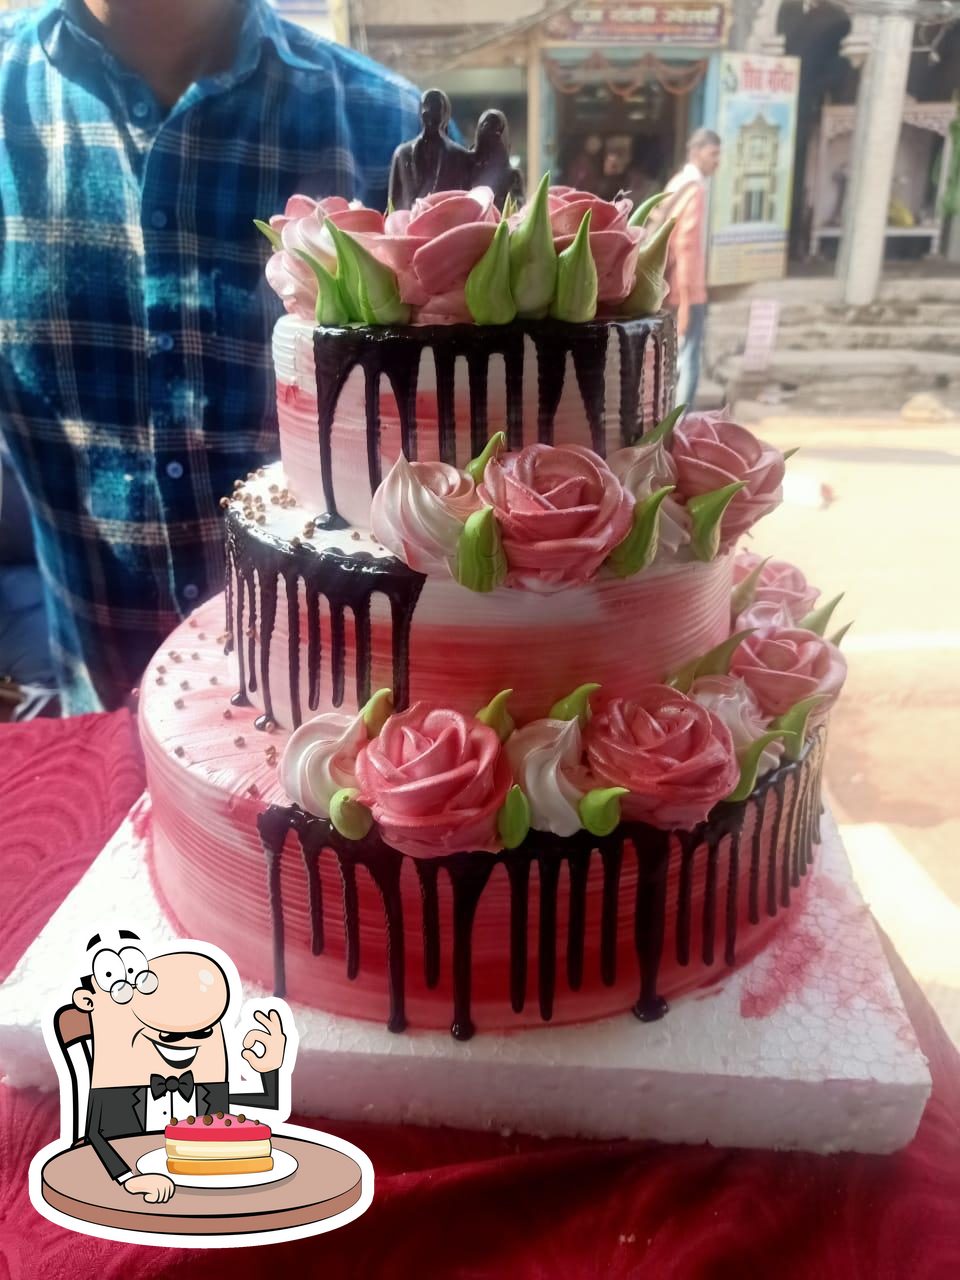 Red Velvet Feast Cake 0.5 kg - Jamshedpur Online Cake Shop